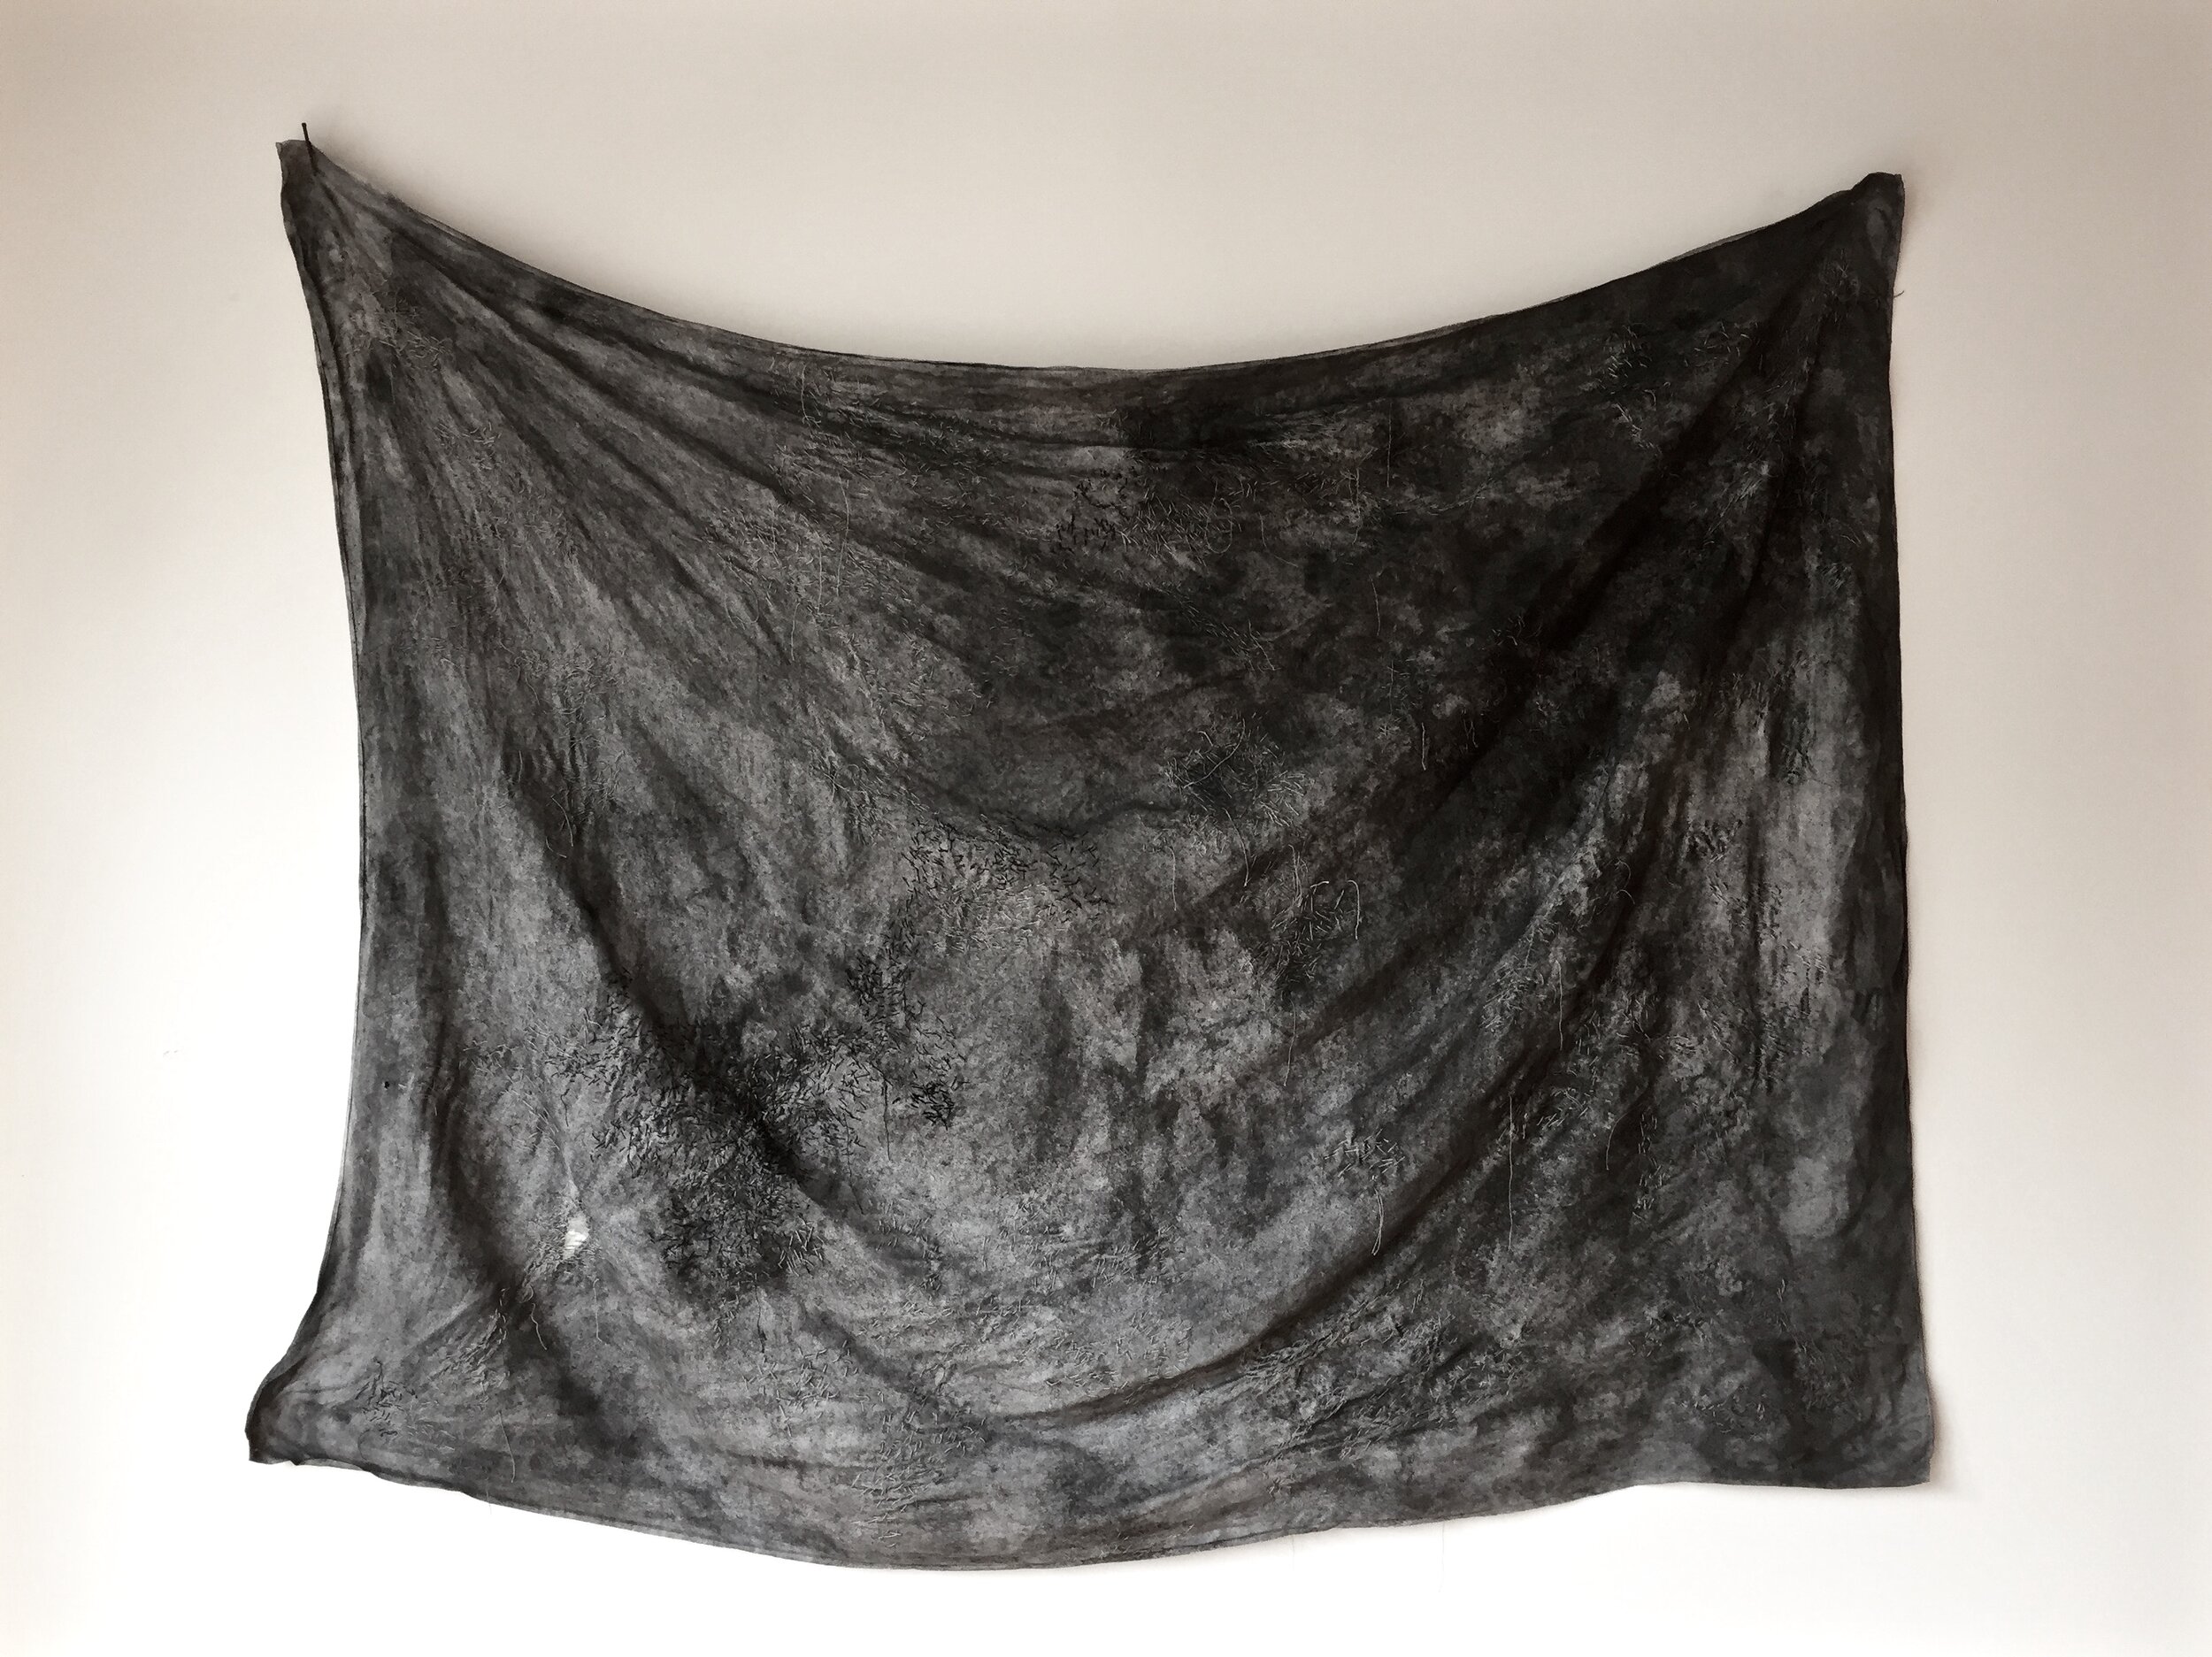  mourning cloth.   tablecloth, thread, charcoal &amp; ash.   2017.  NG. Ōtautahi. 